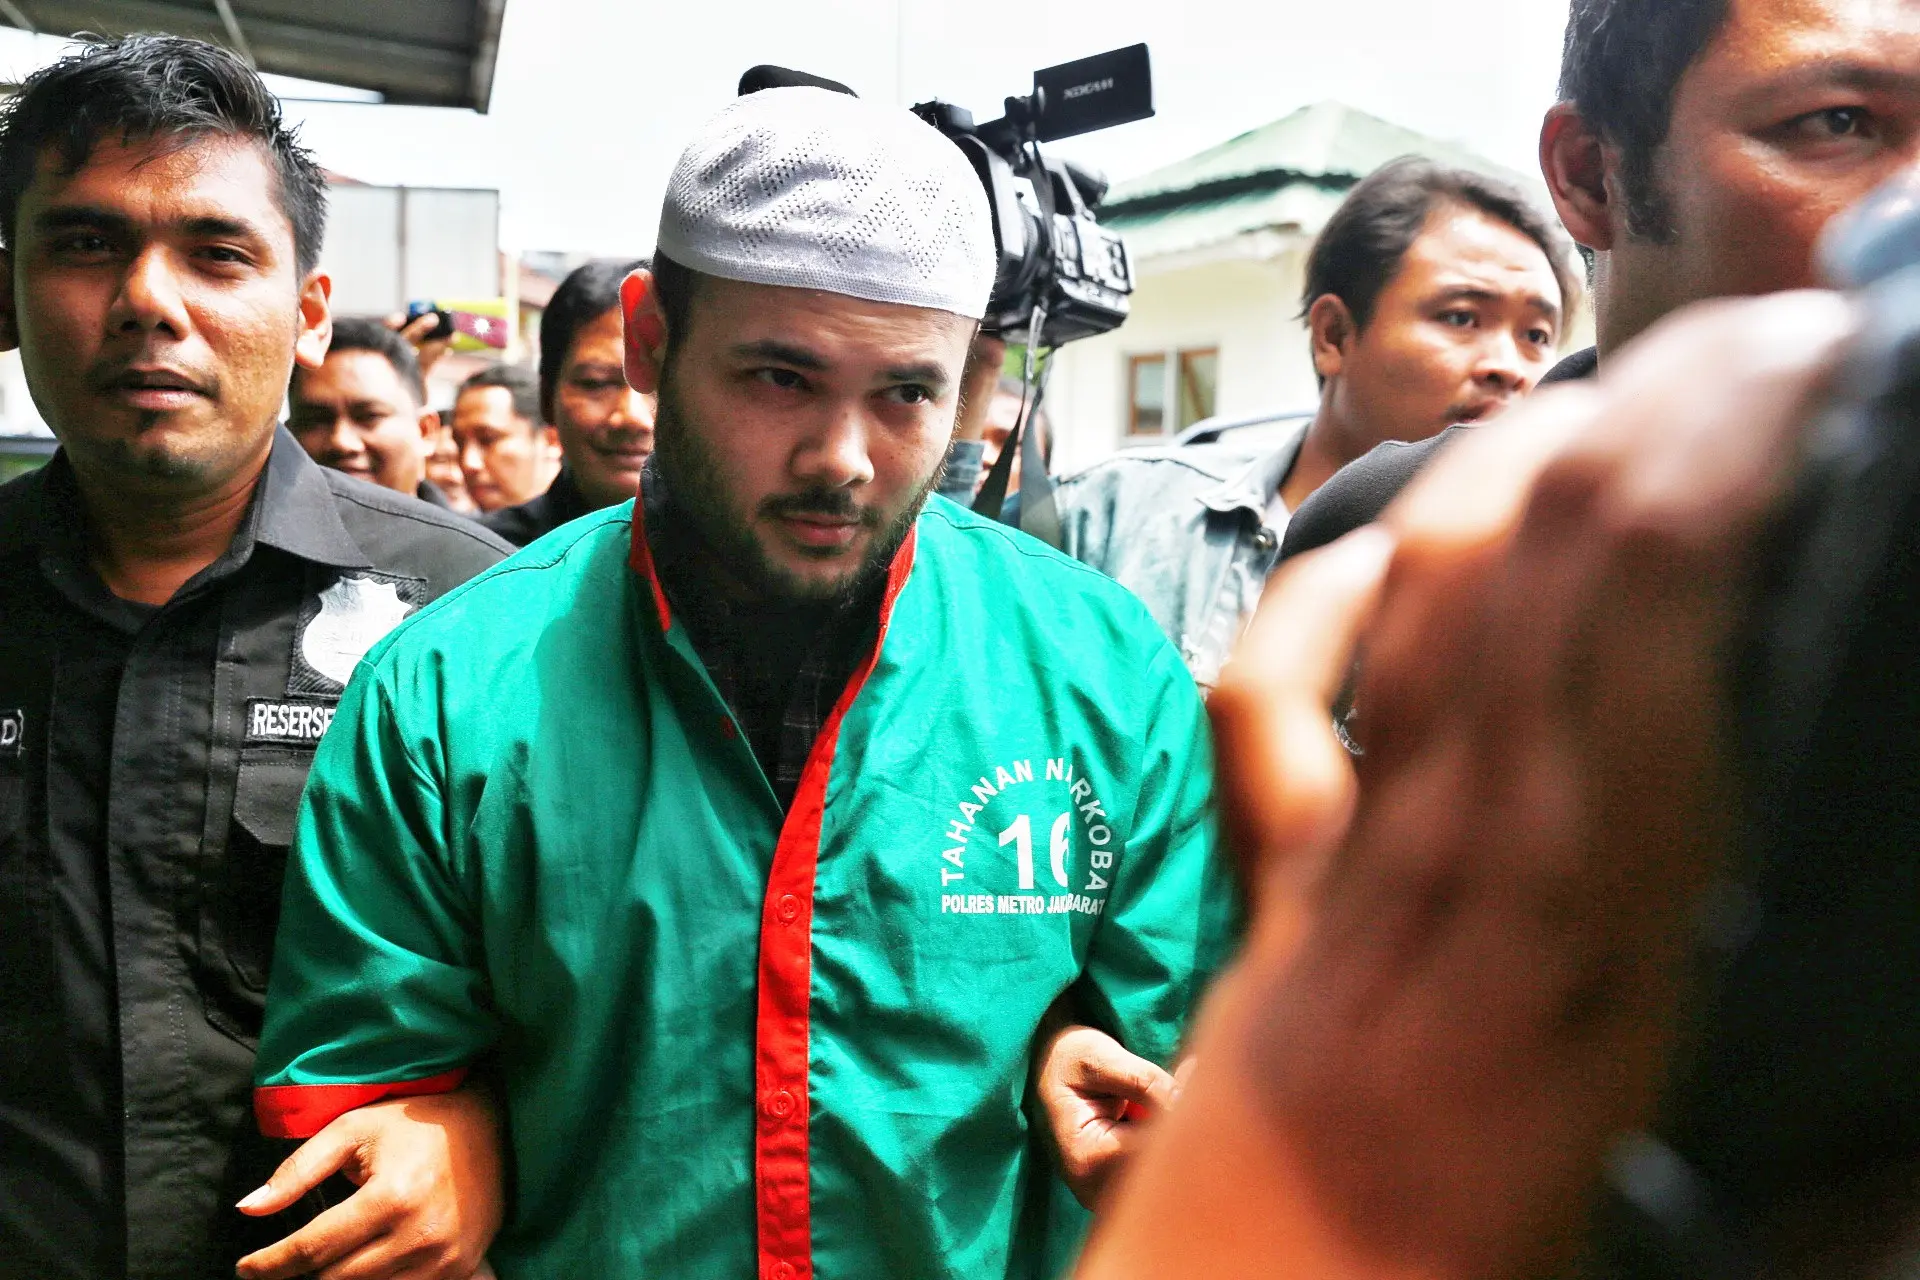 Sudah hampir dua minggu ini, Ridho berada di tahanan Polres Jakarta barat sejak dirinya tertangkap pada 25 Maret 2017 lalu. Seperti yang diberitakan sebelumnya, Ridho telah mengkonsumsi narkoba selama dua tahun. (Adrian Putra/Bintang.com)